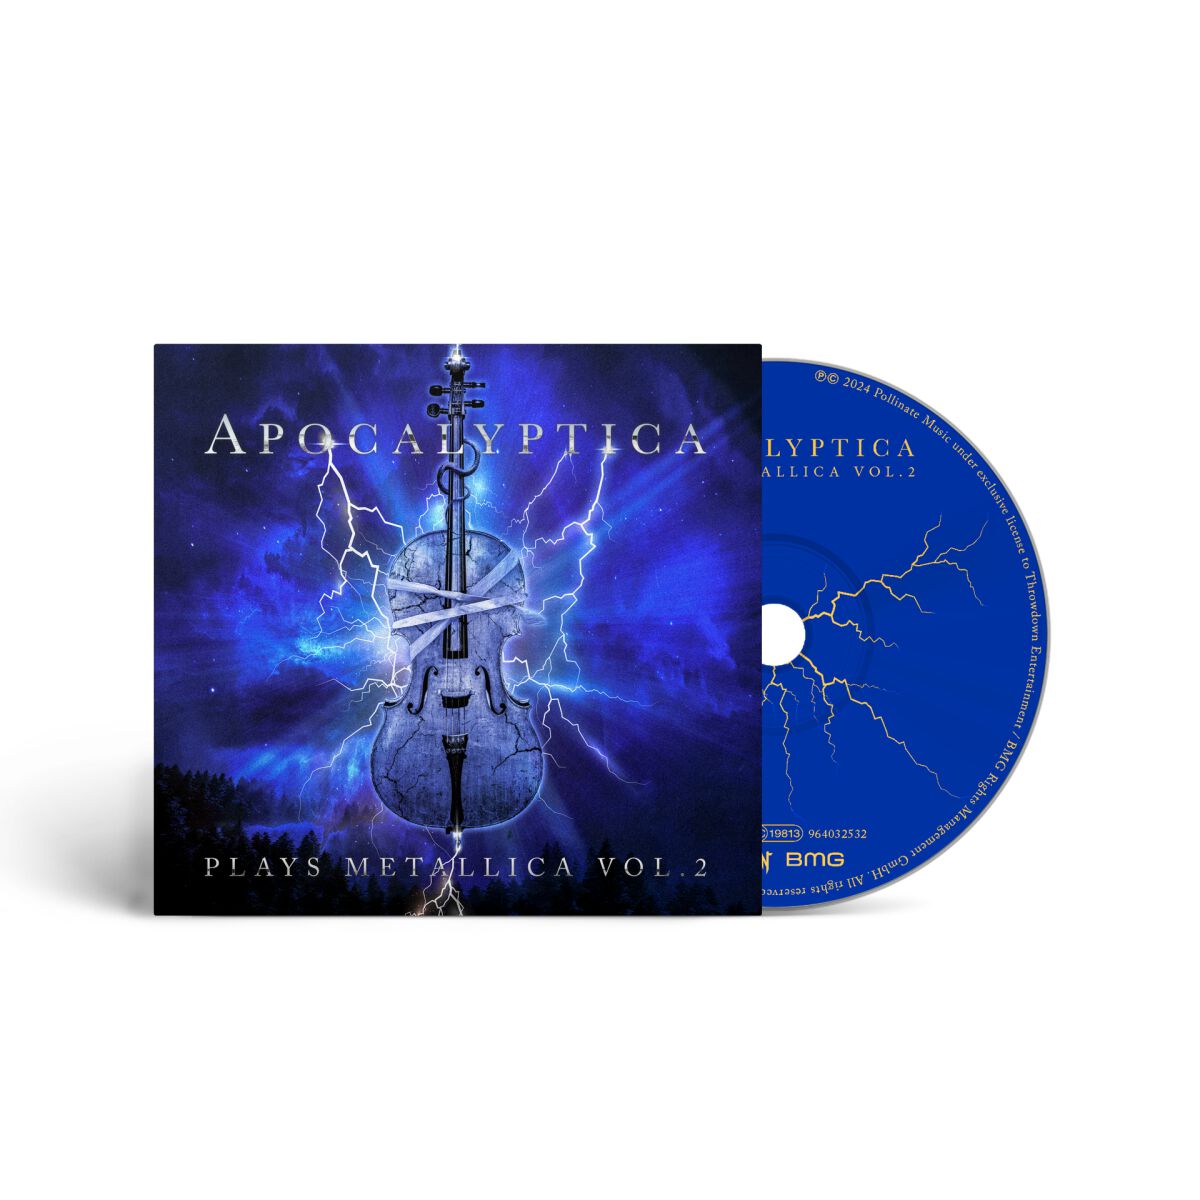 Plays Metallica Vol. 2 von Apocalyptica - CD (Digisleeve)